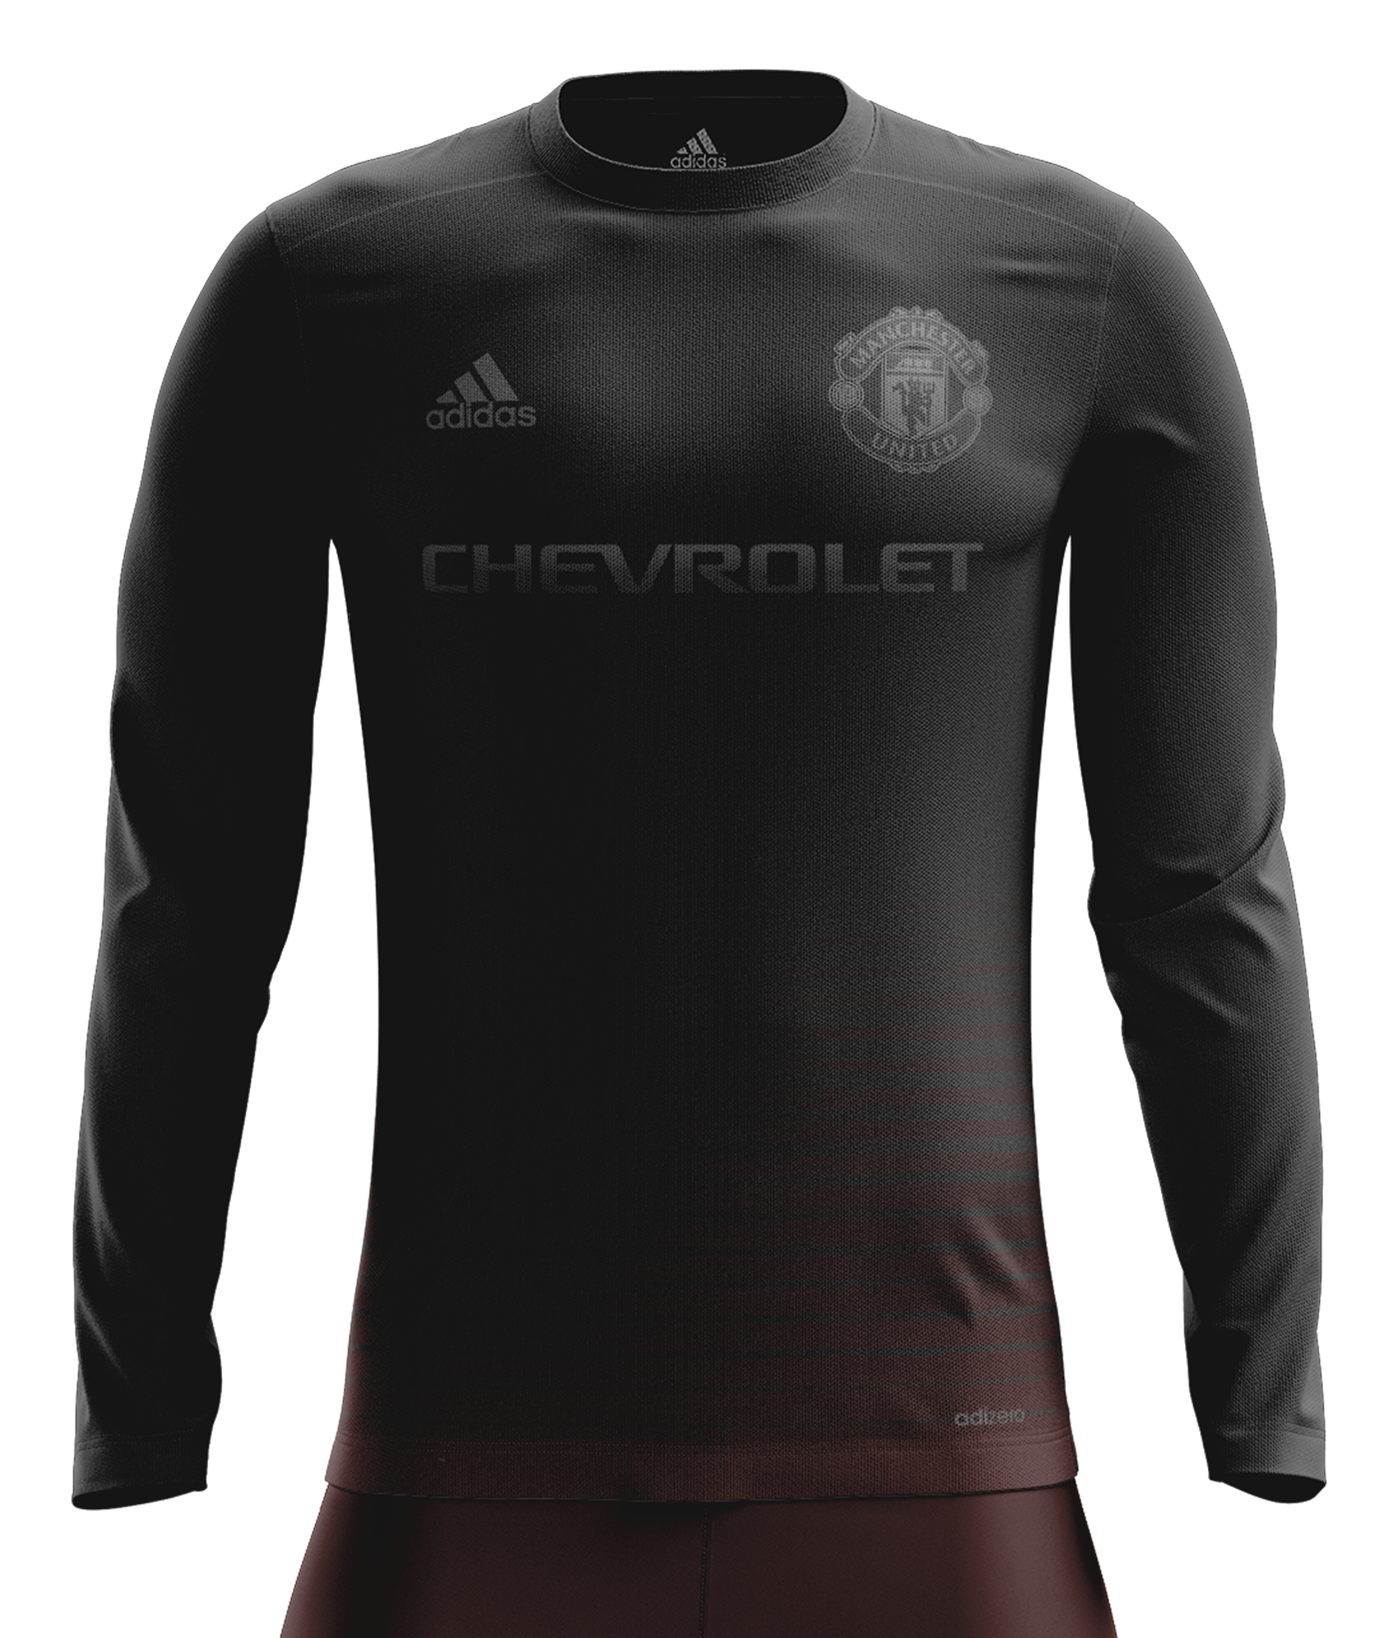 Manchester United man utd manu adidas jersey Kit Design filth design